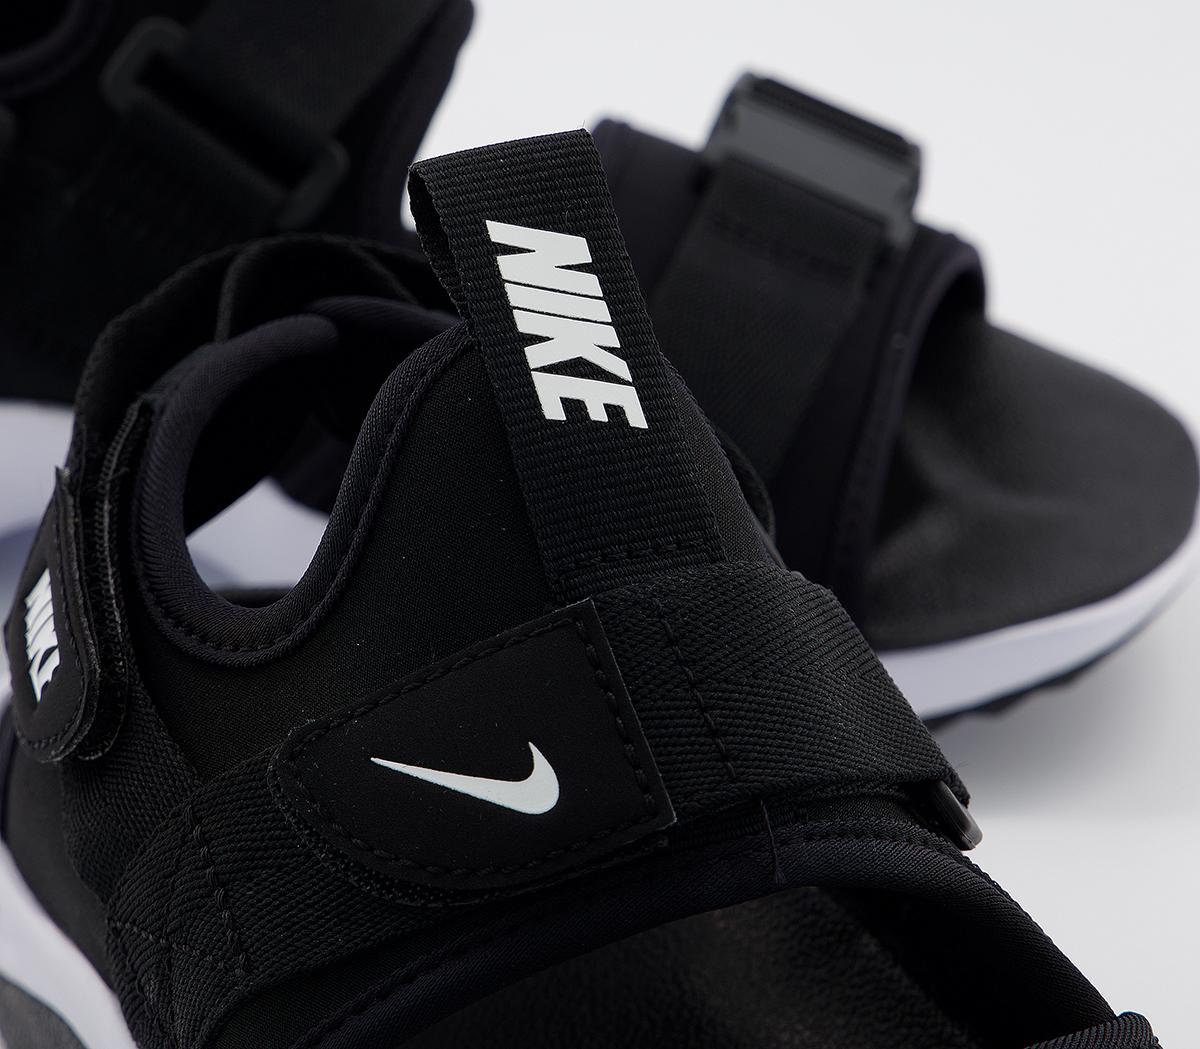  Nike  Canyon Sandals  Black  White  F Sandals 